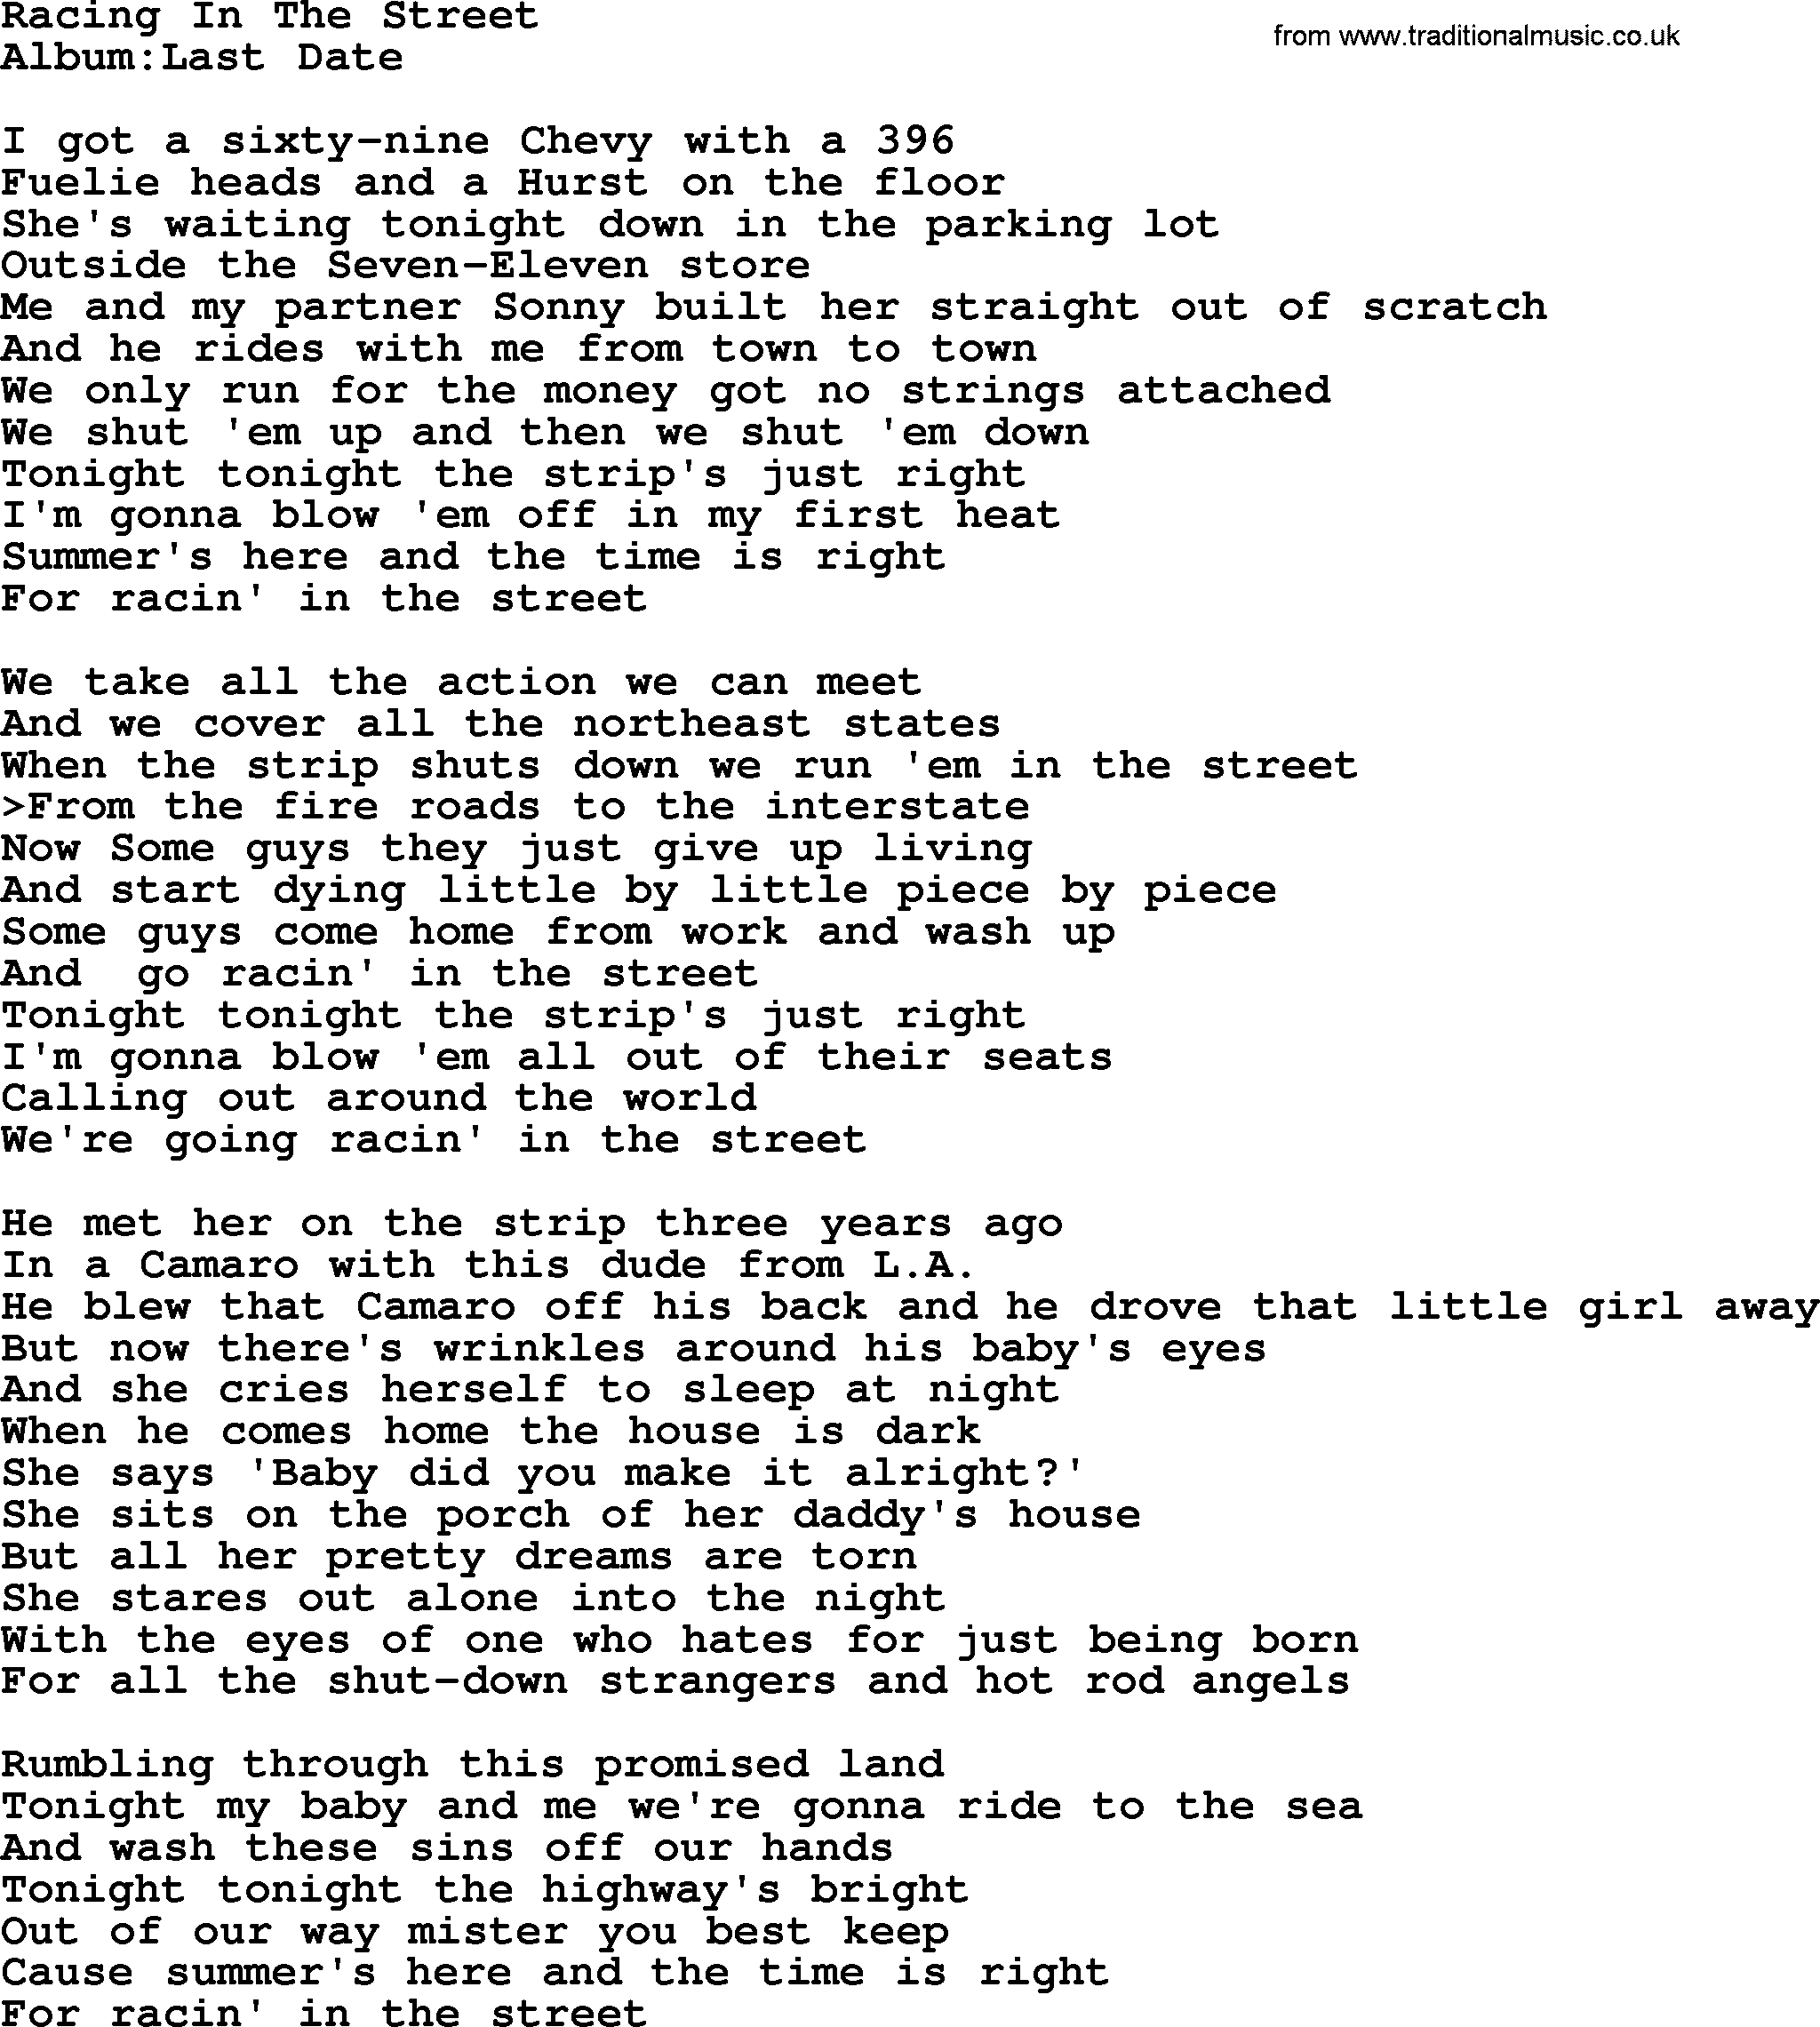 Emmylou Harris song: Racing In The Street, lyrics